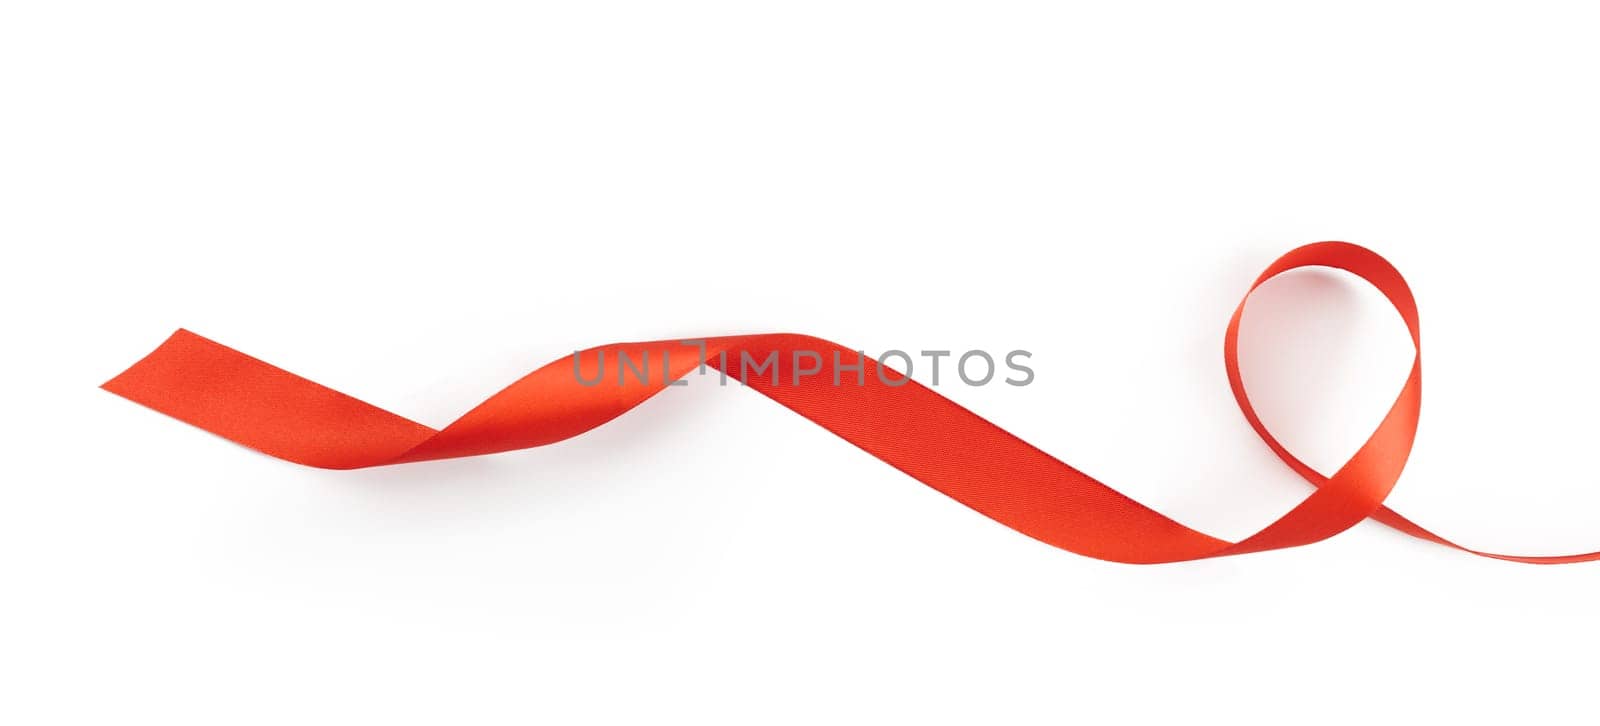 ribbon on a white background by Fabrikasimf